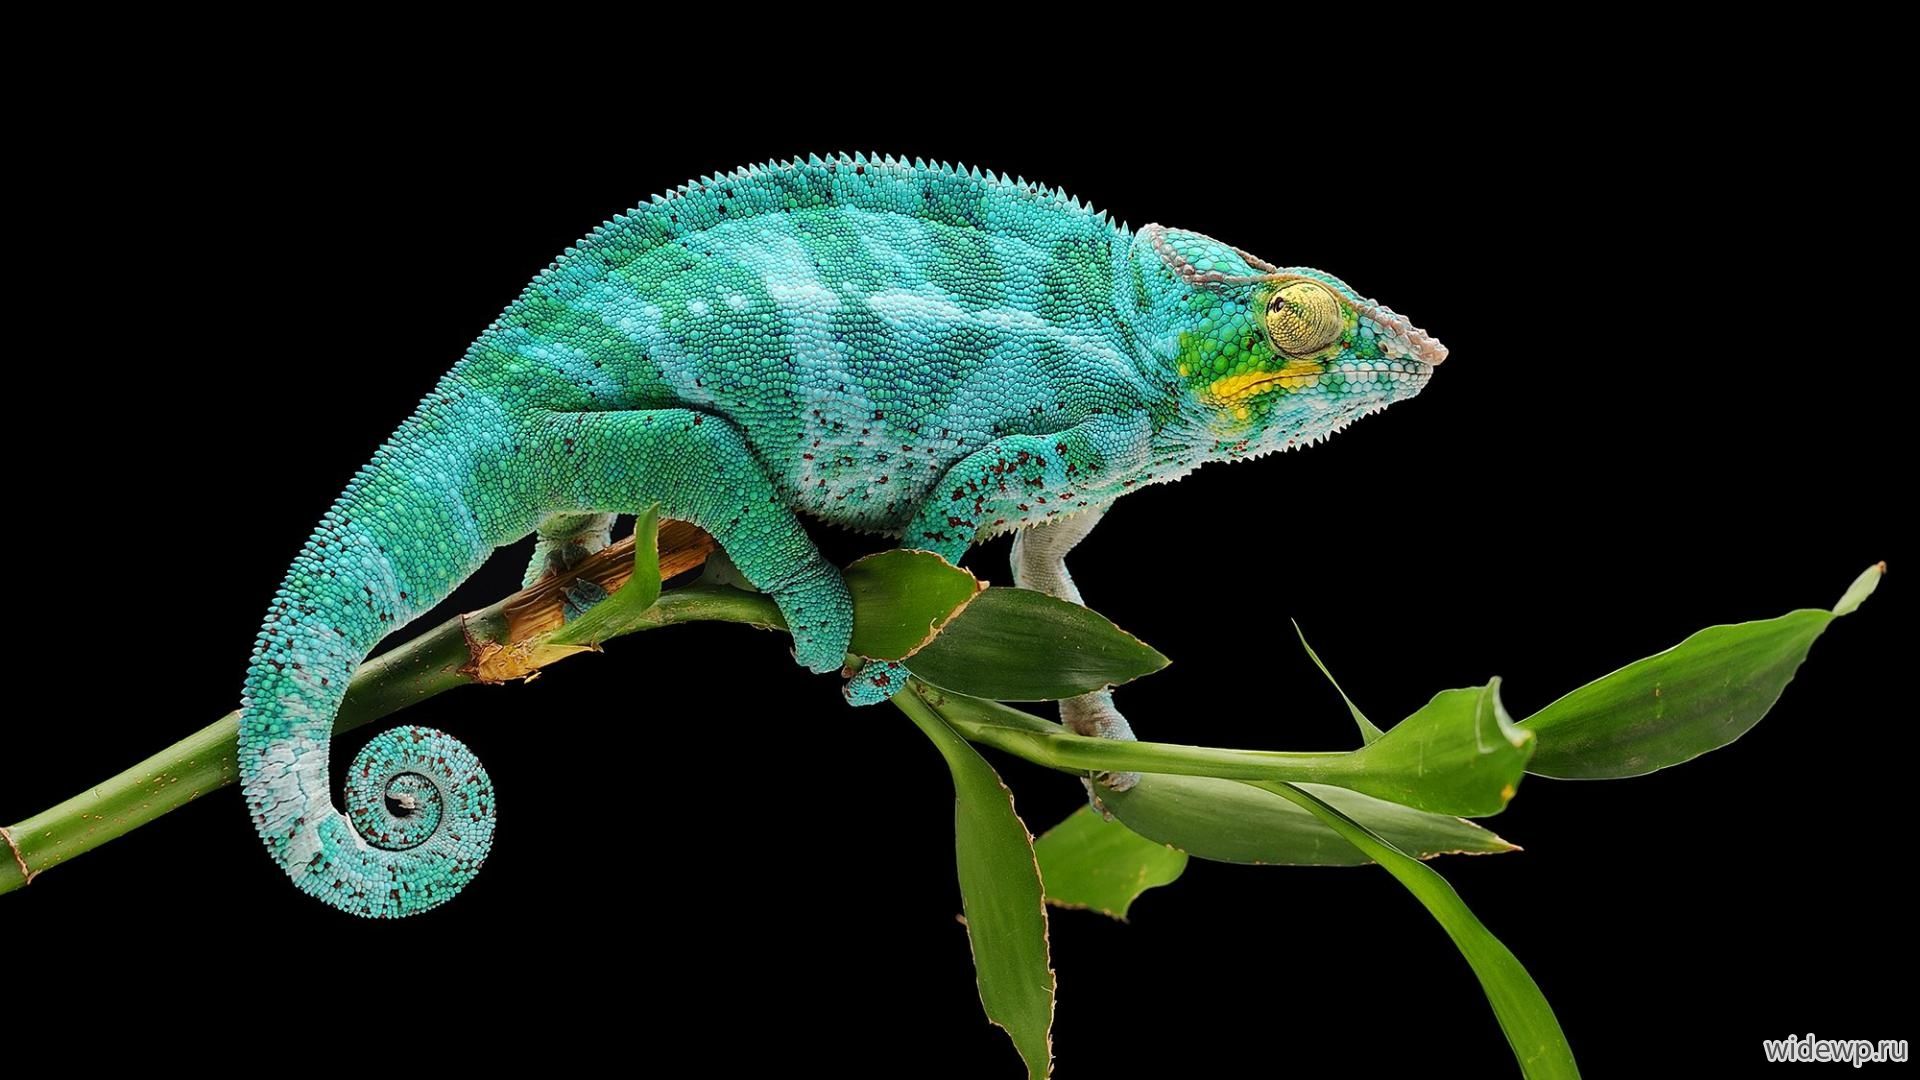 Chameleon On A Branch